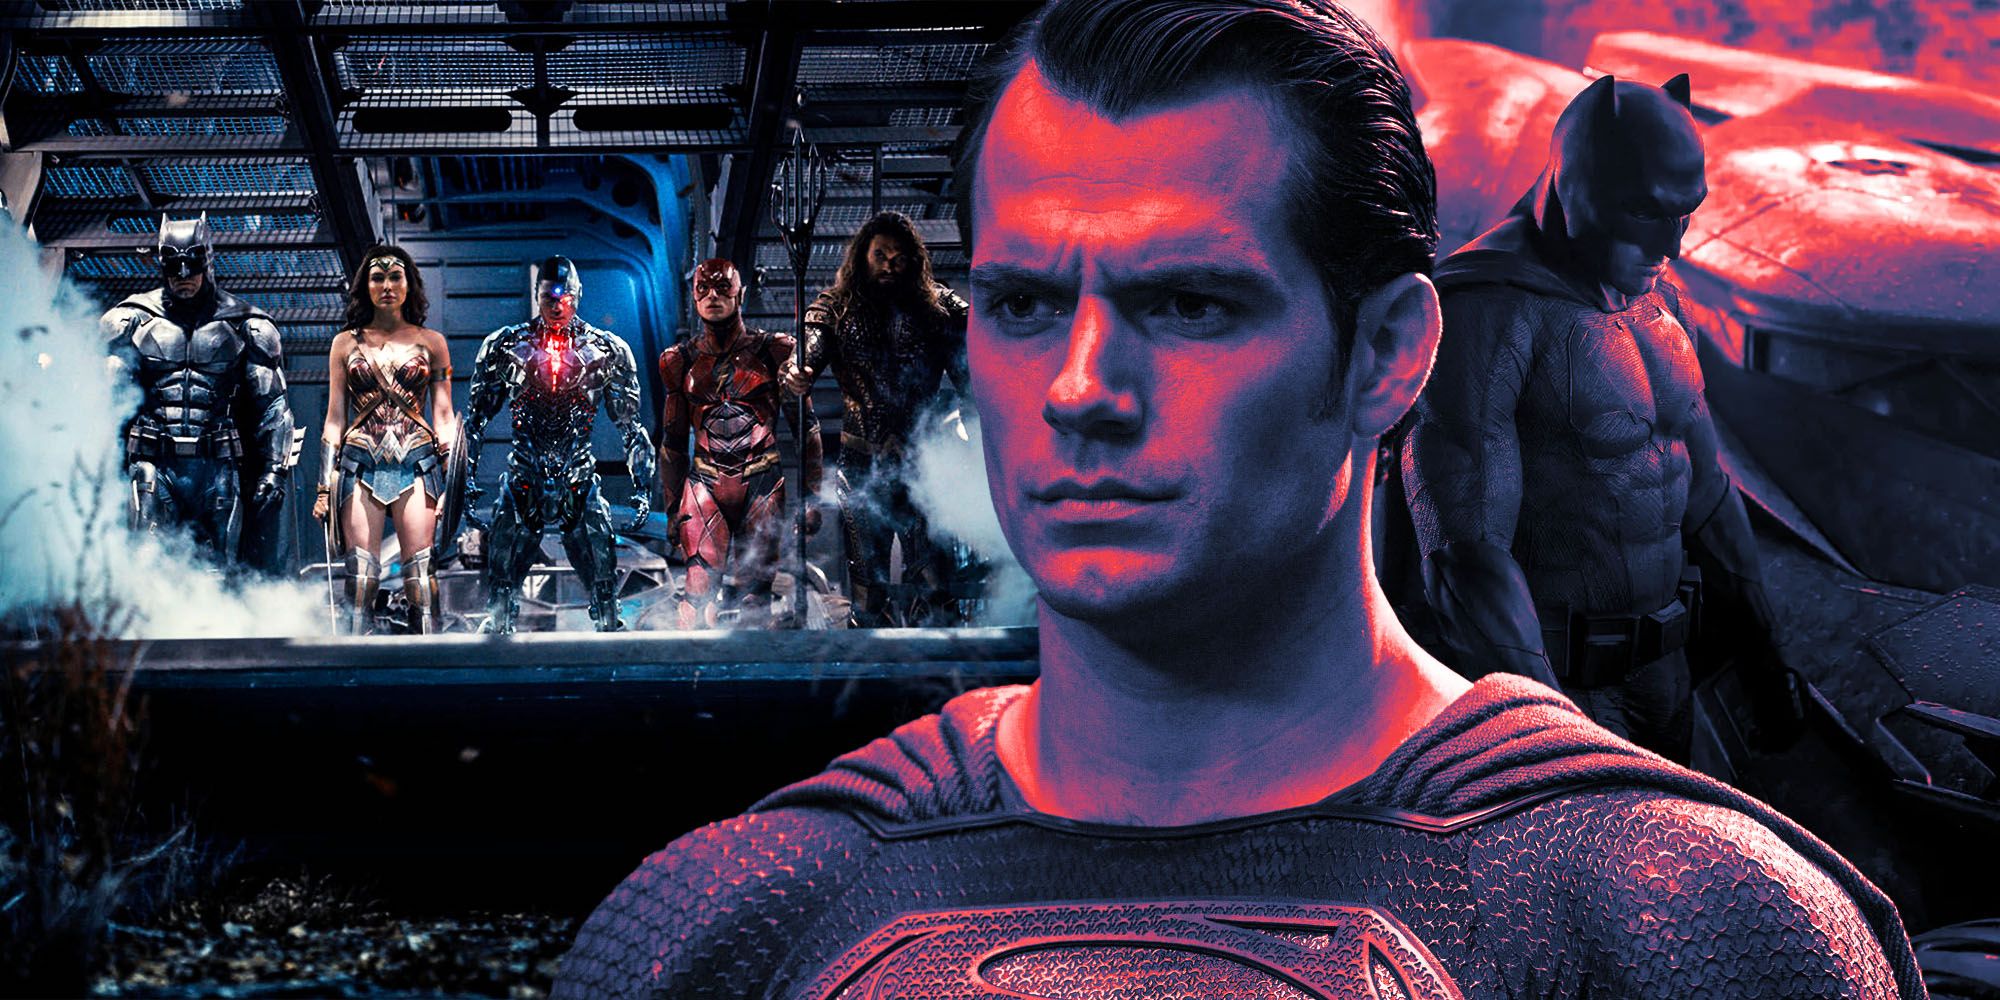 El puntaje de Rotten Tomatoes de BvS subió debido a la Liga de la Justicia de Zack Snyder